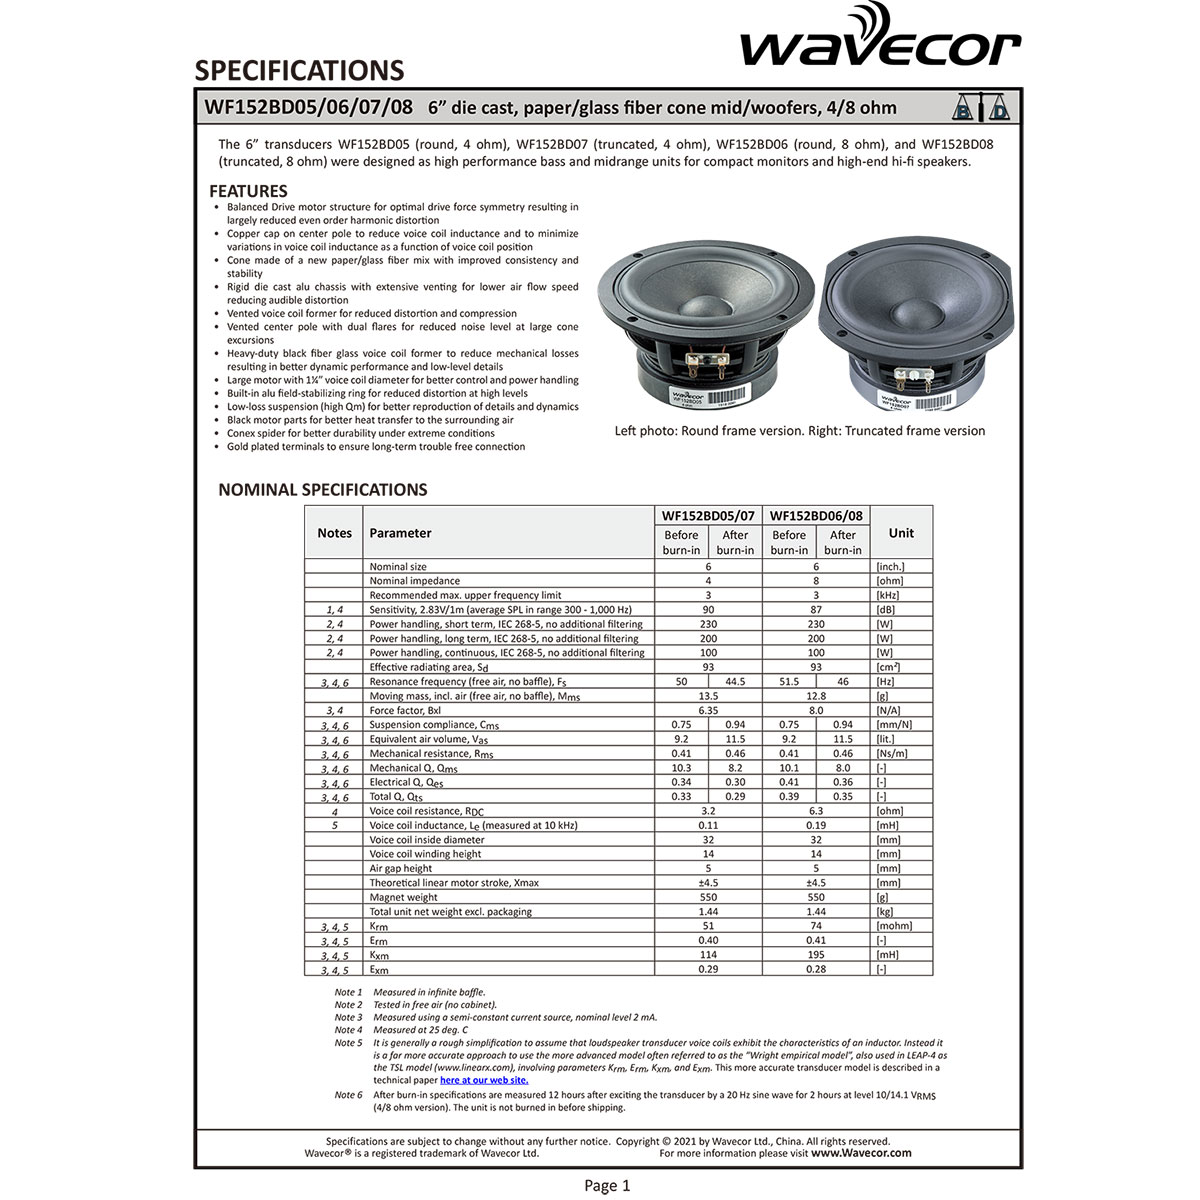 Wavecor WF152BD07の画像